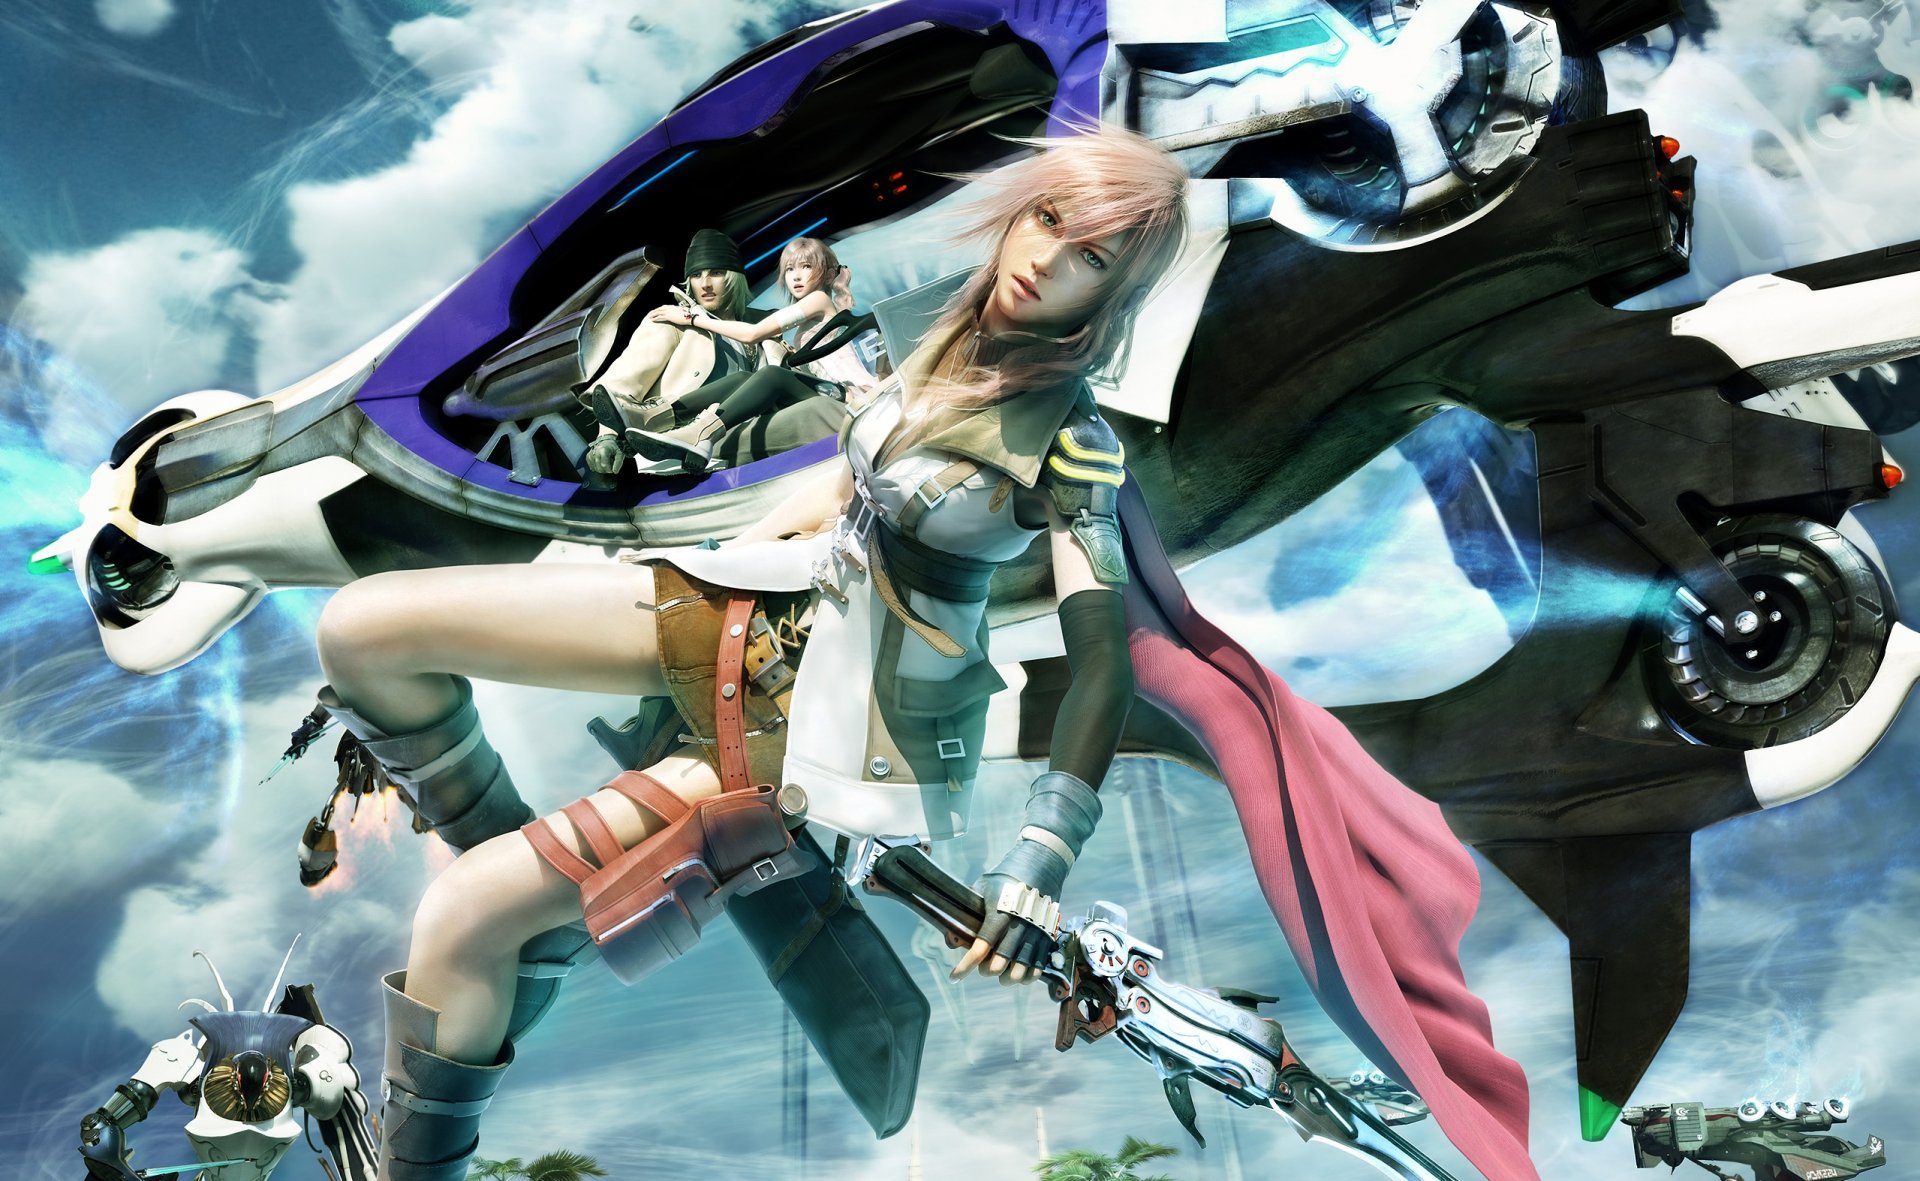 Download Serah Farron Snow Villiers Lightning (Final Fantasy) Video Game Final Fantasy XIII  HD Wallpaper